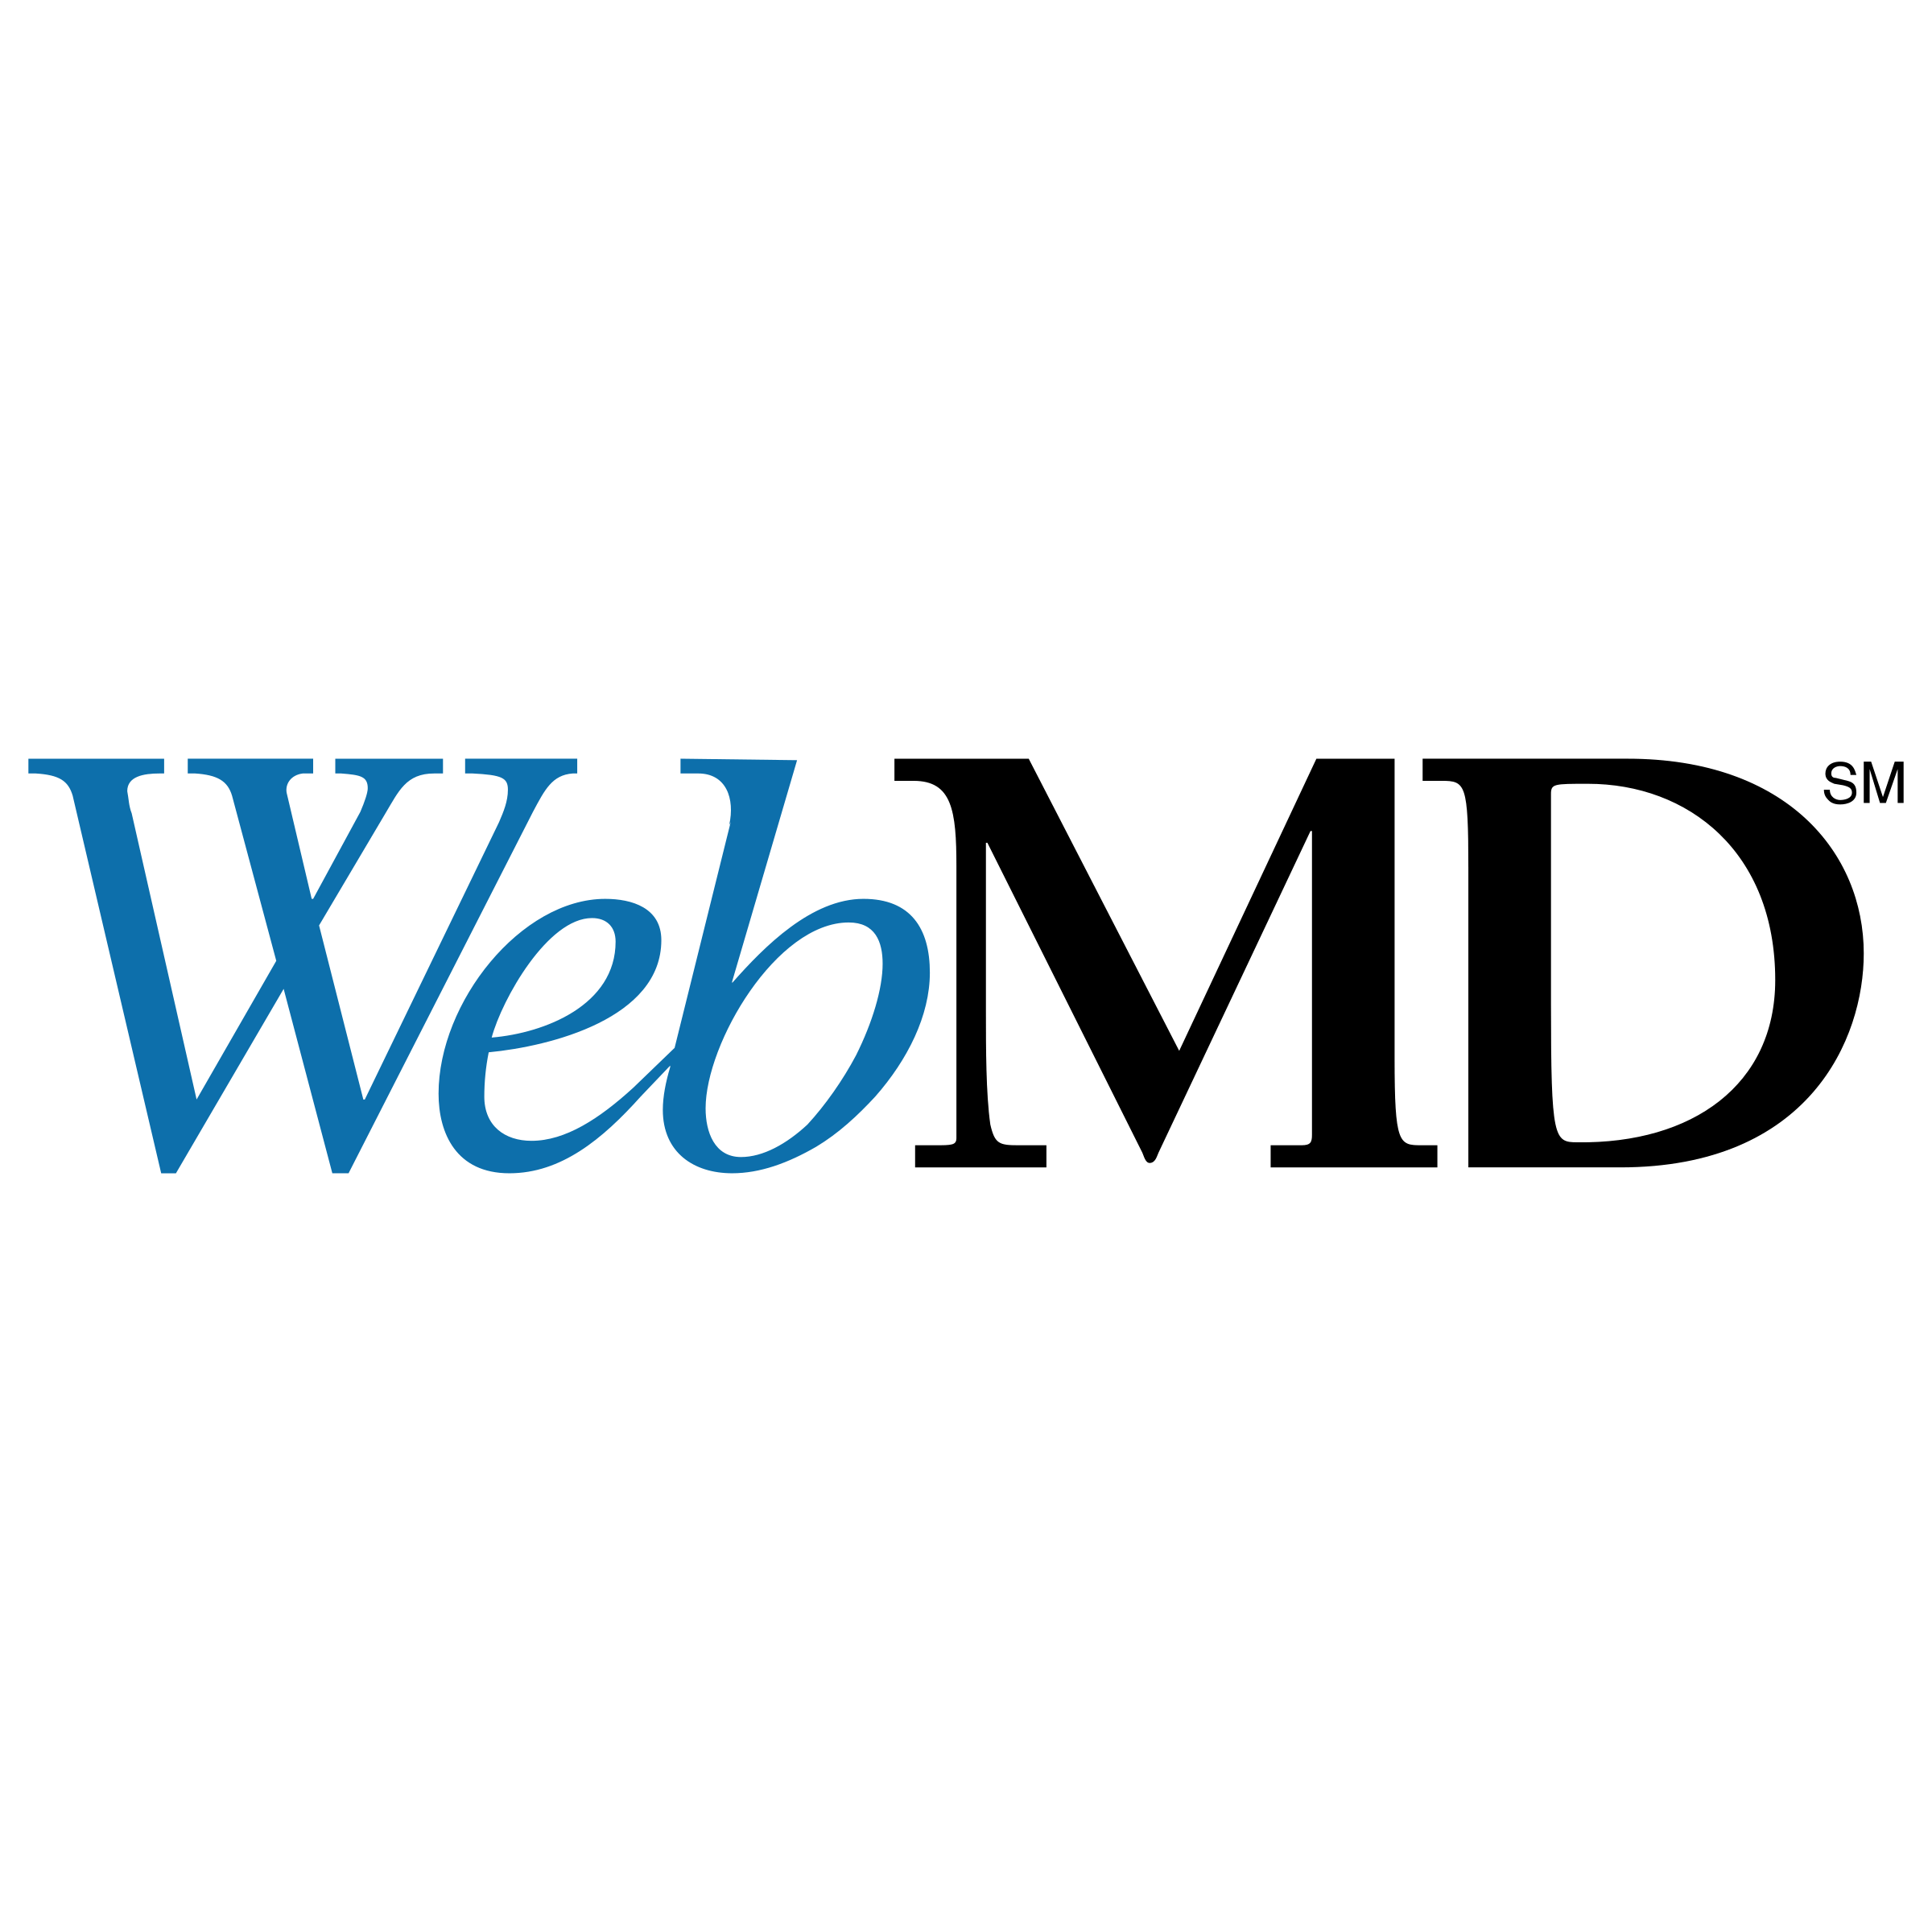 Webmd.com Logo - WebMD Logo PNG Transparent & SVG Vector - Freebie Supply